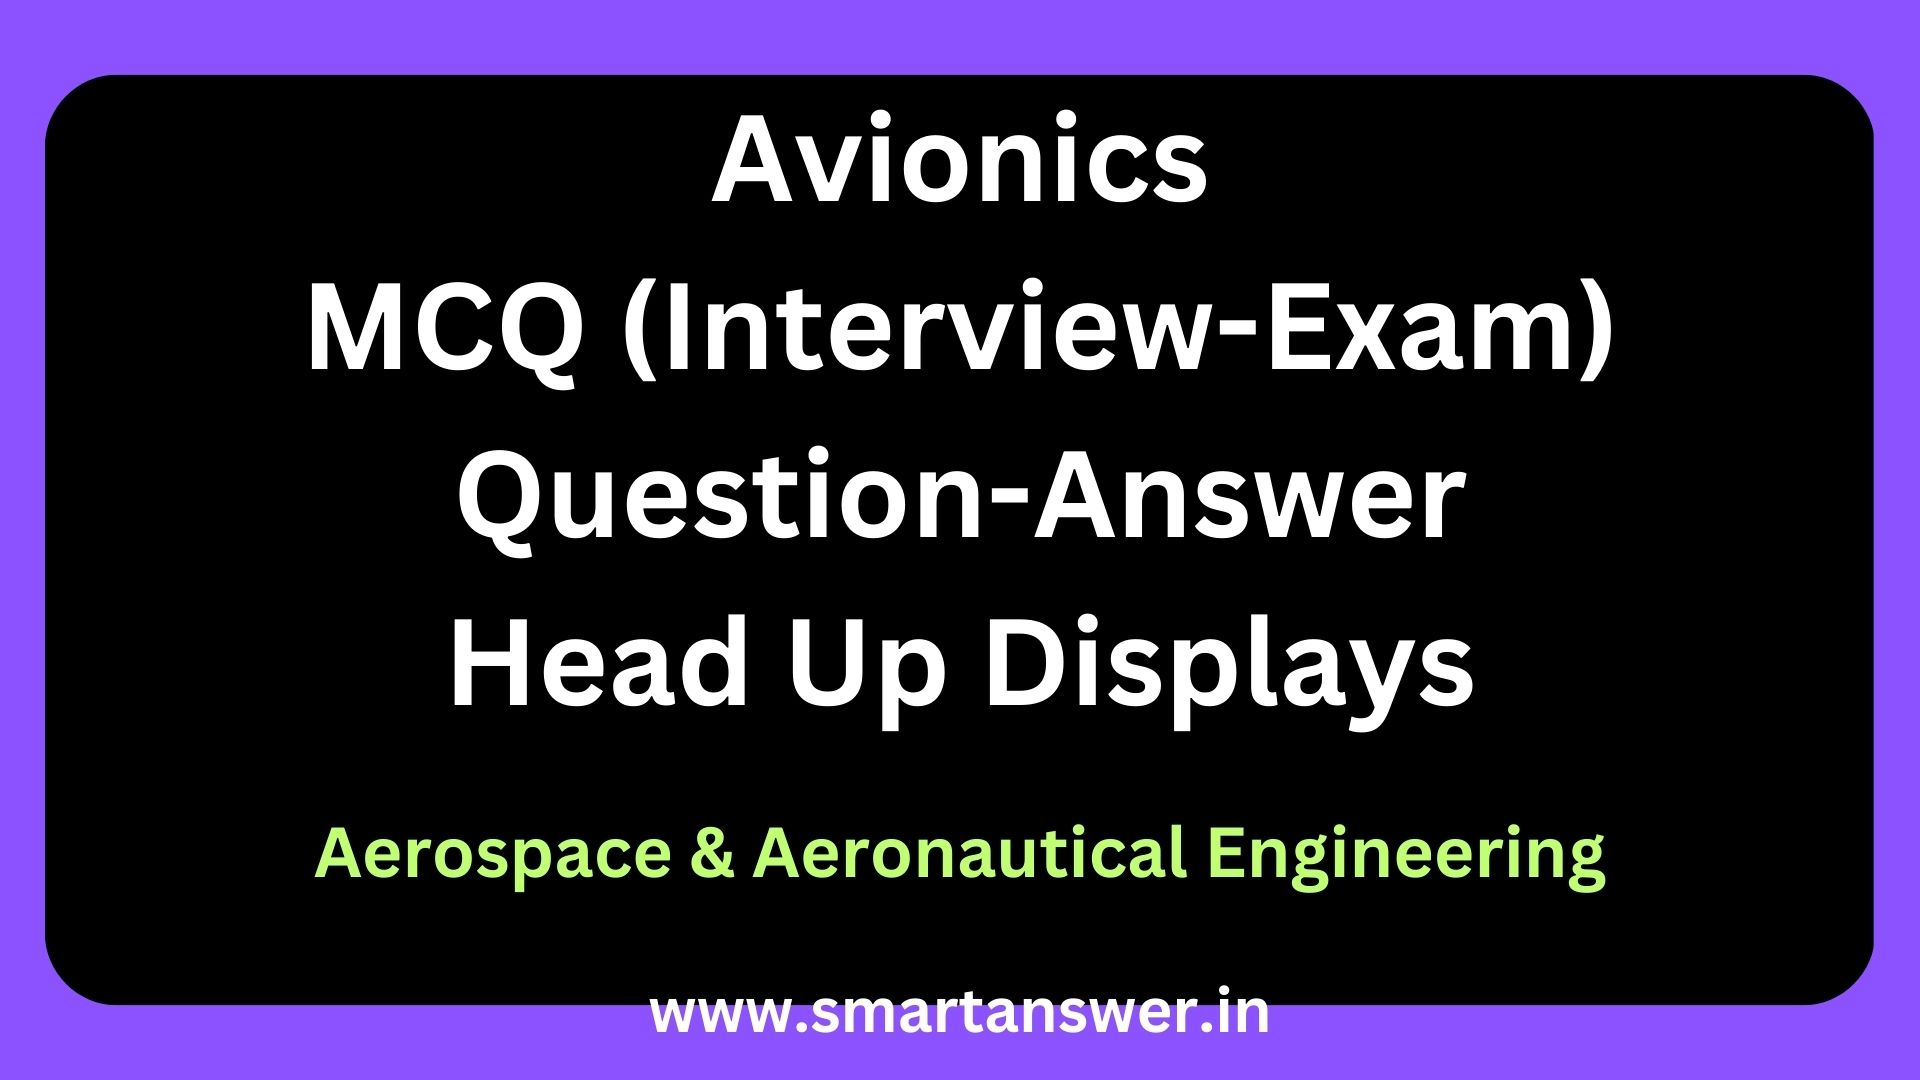 Avionics MCQ (Interview-Exam) Question-Answer - Head Up Displays